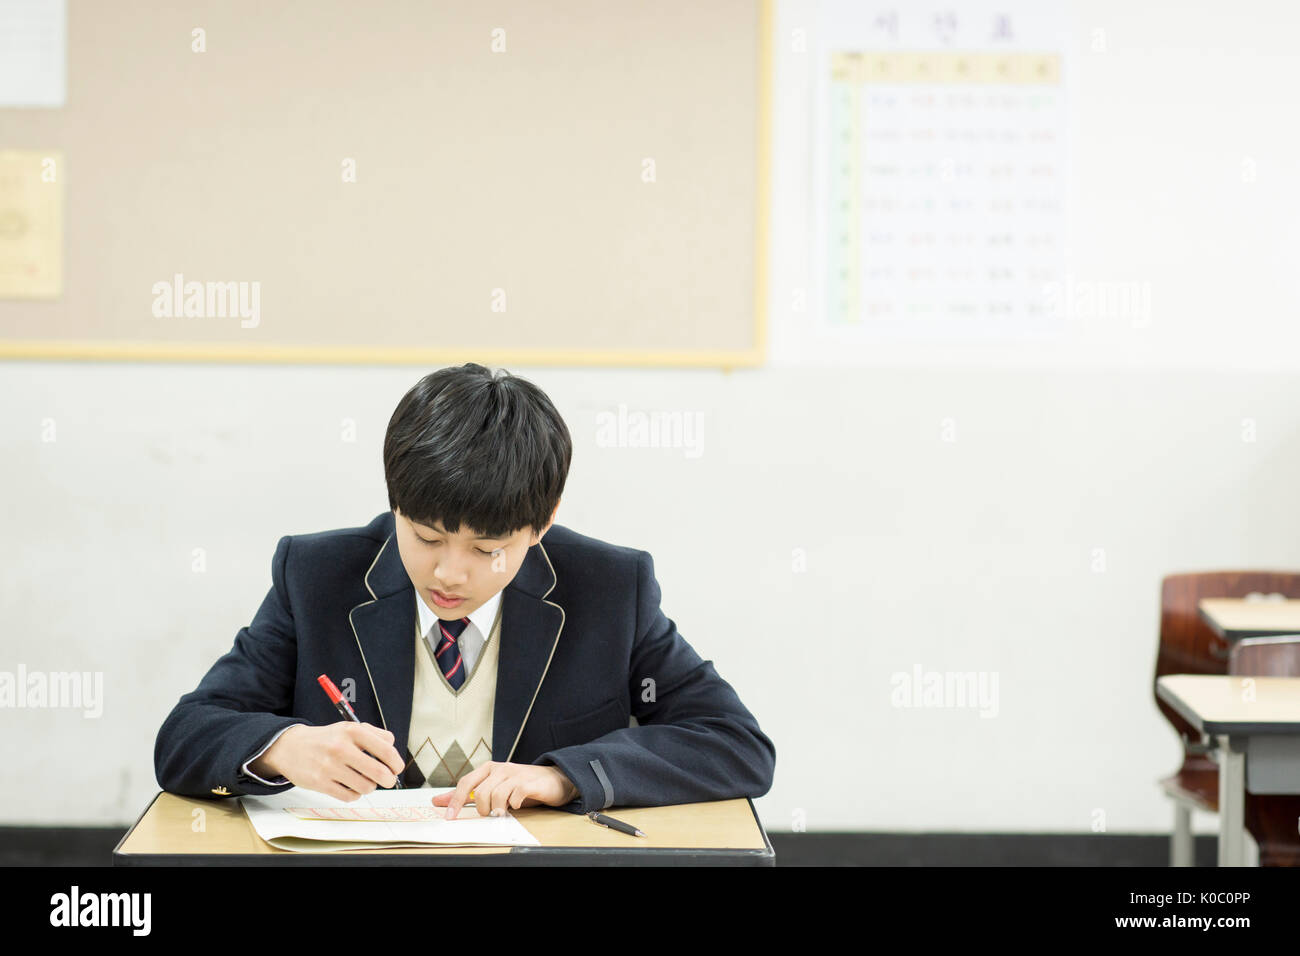 Portrait of school boy taking exam Stock Photo